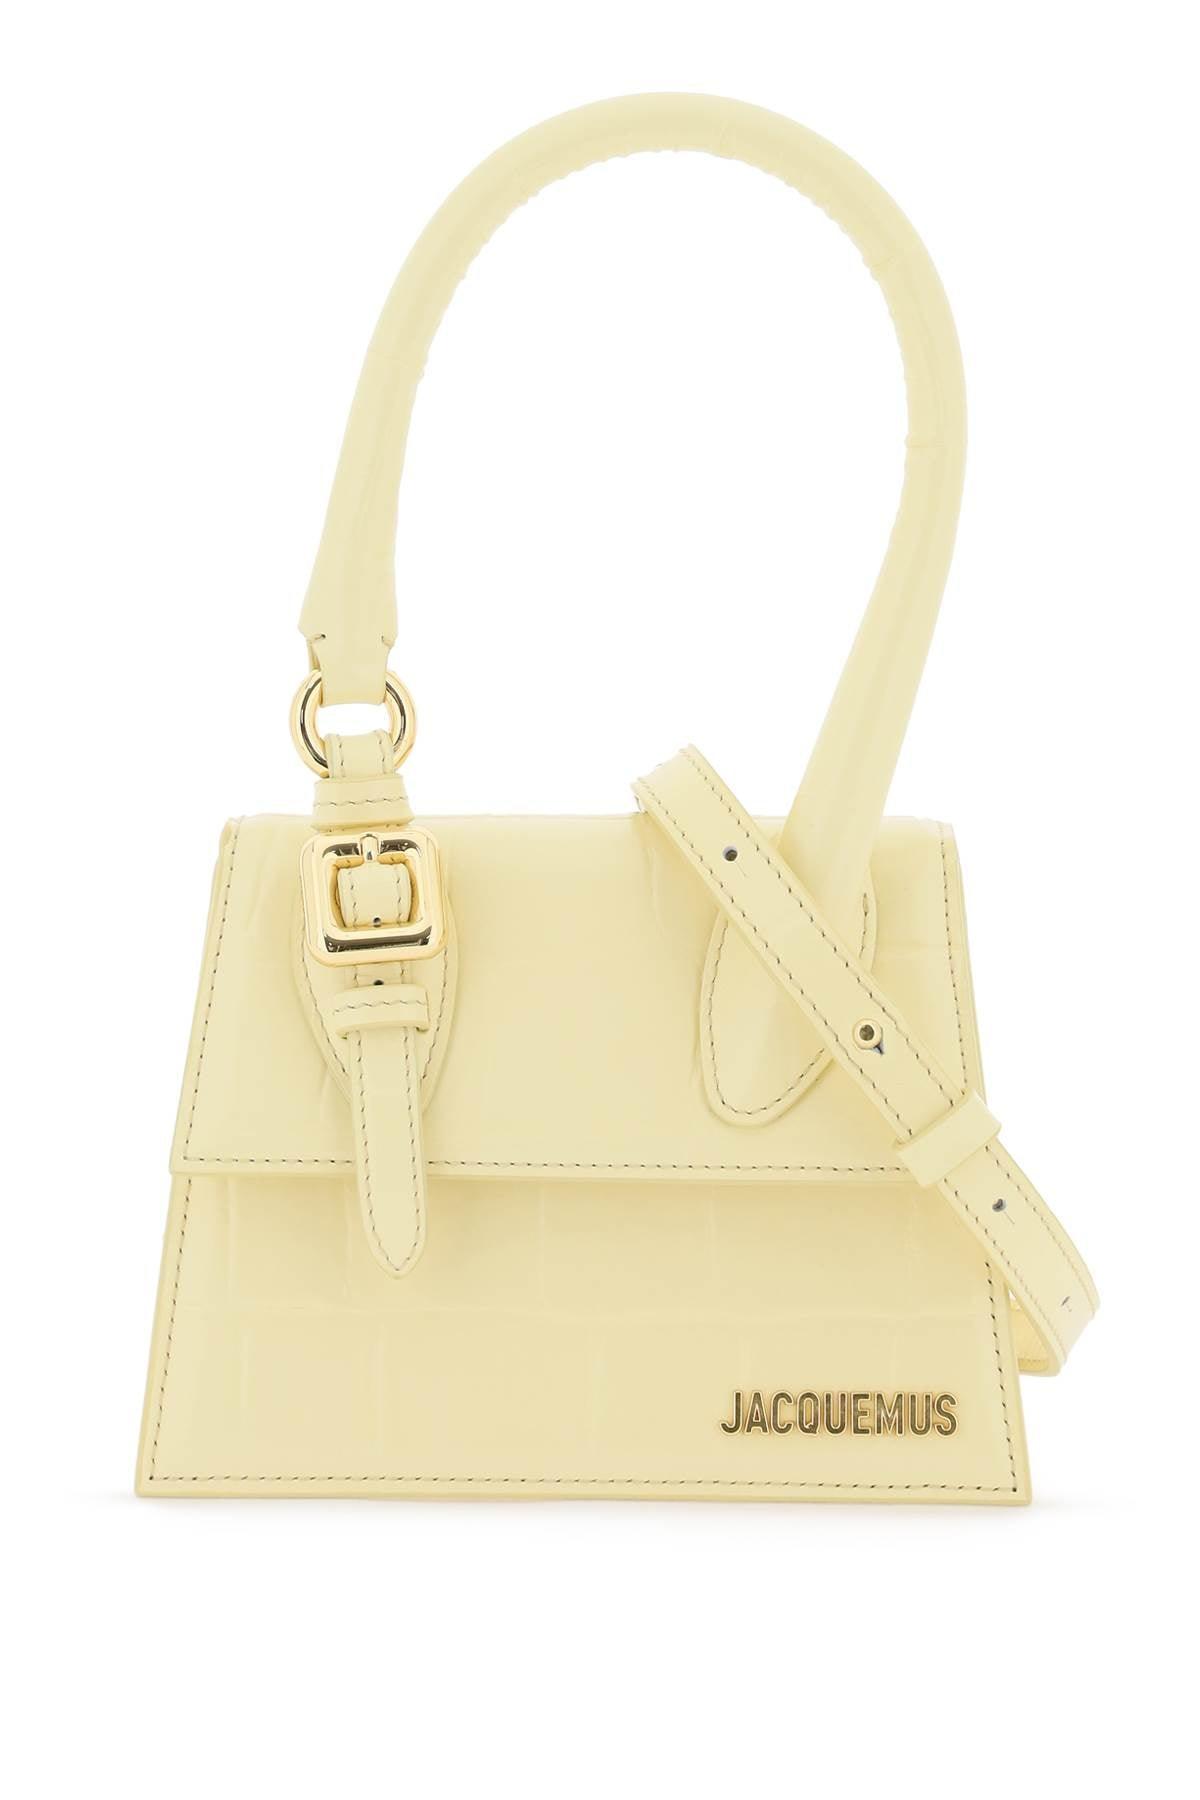 Jacquemus Le Chiquito Moyen Boucle Bag in Pale Yellow - JOHN JULIA